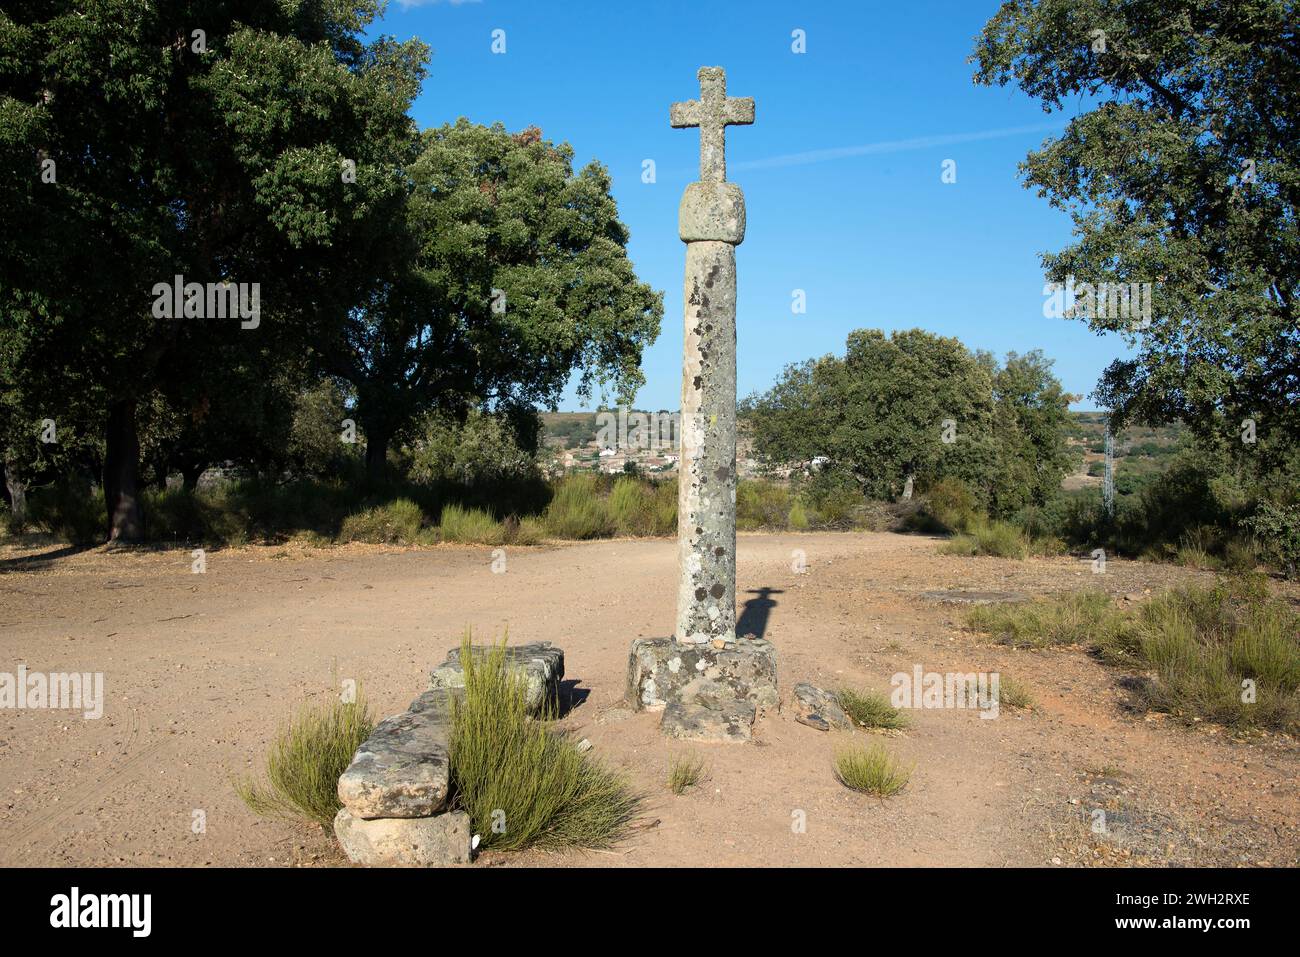 Fornillos de Fermoselle, Villar del Buey municipality. Figalina cross. Zamora province, Castilla y Leon, Spain. Stock Photo